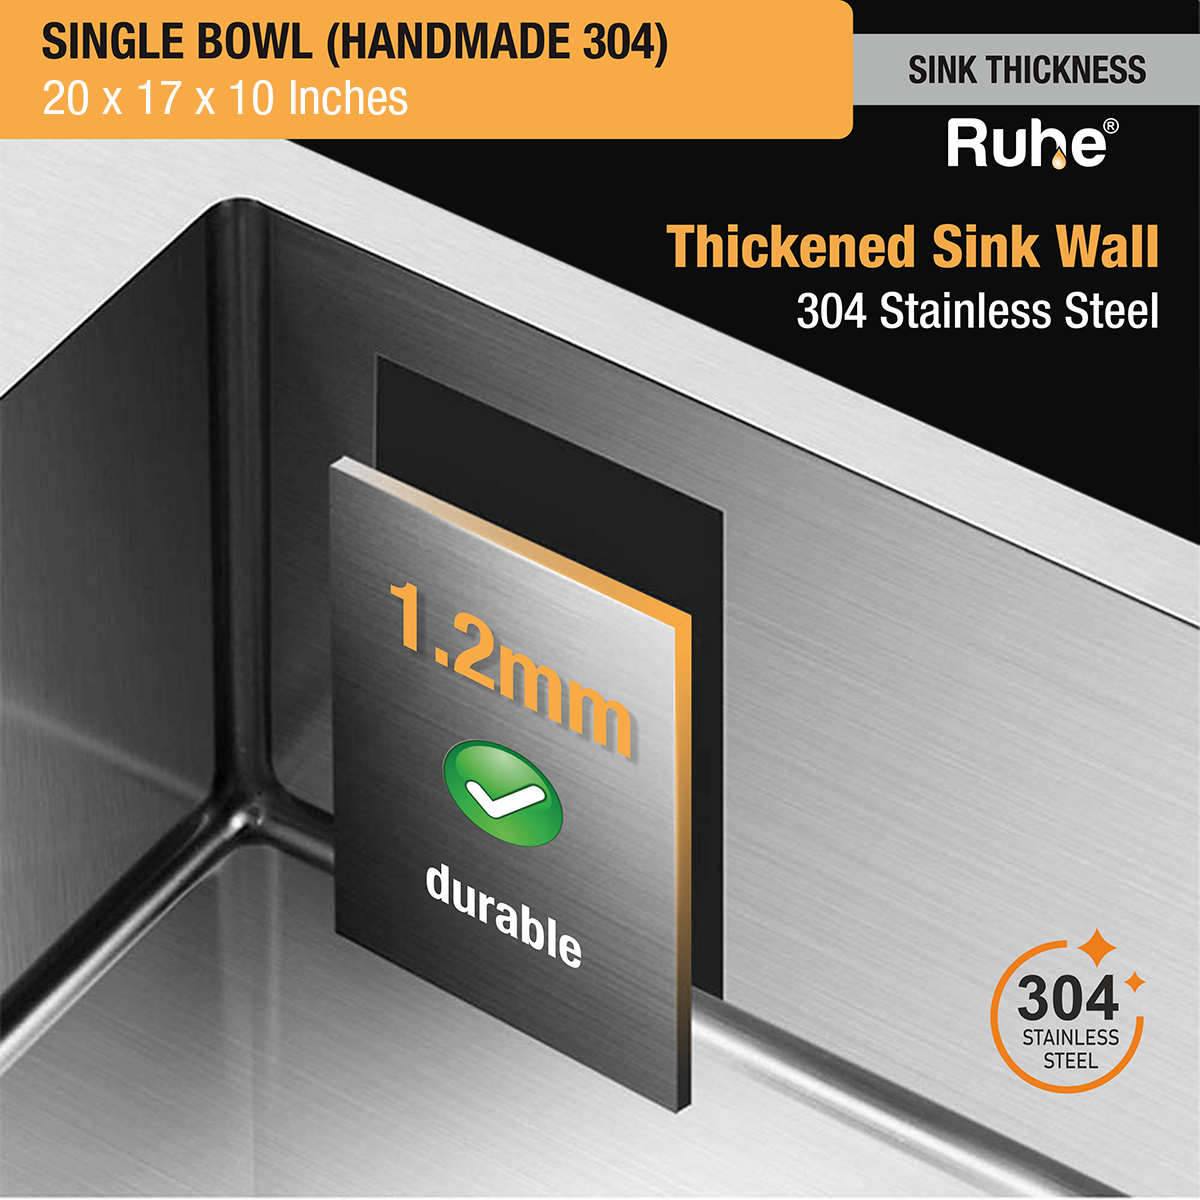 Handmade Single Bowl 304-Grade Kitchen Sink (20 x 17 x 10 Inches) steel sink thickness